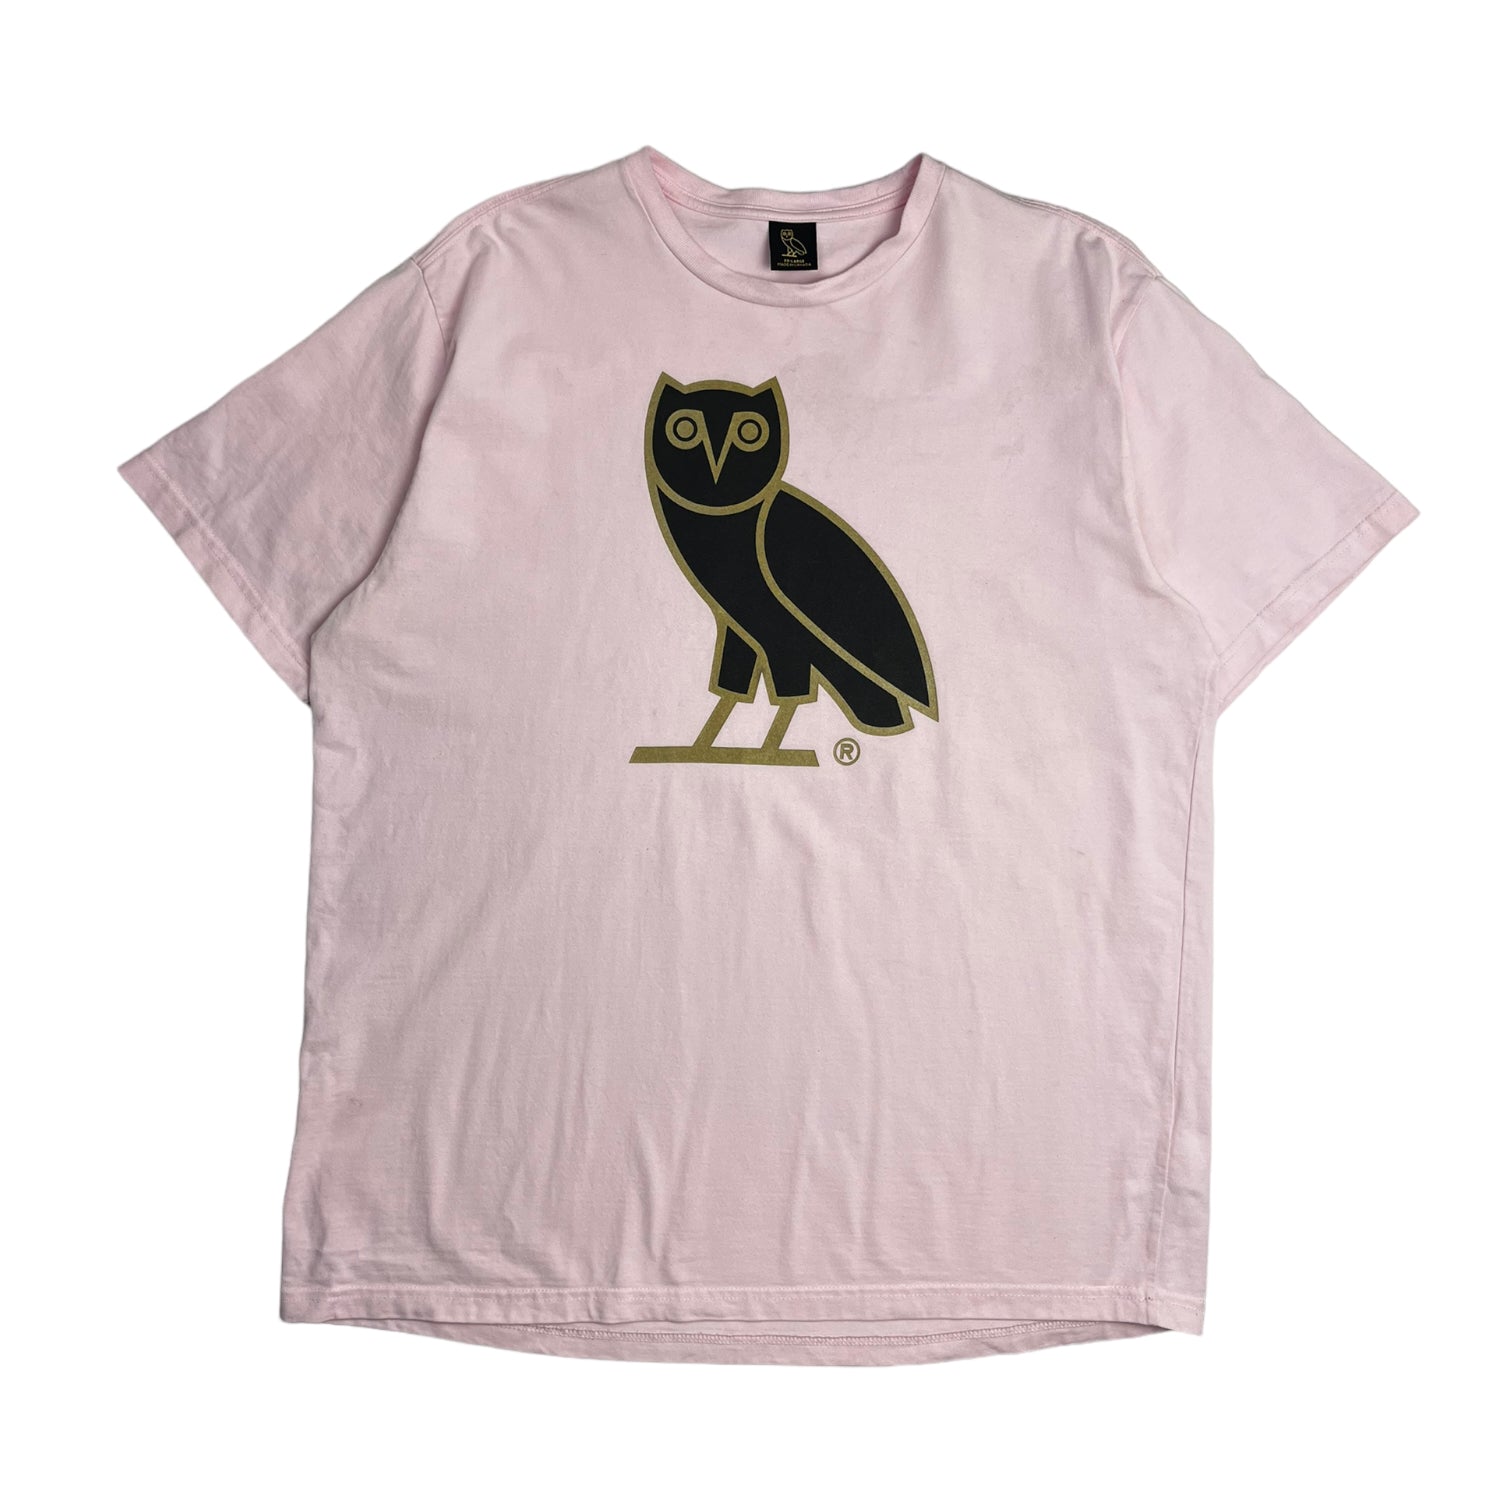 OVO Big Owl T-Shirt Pink